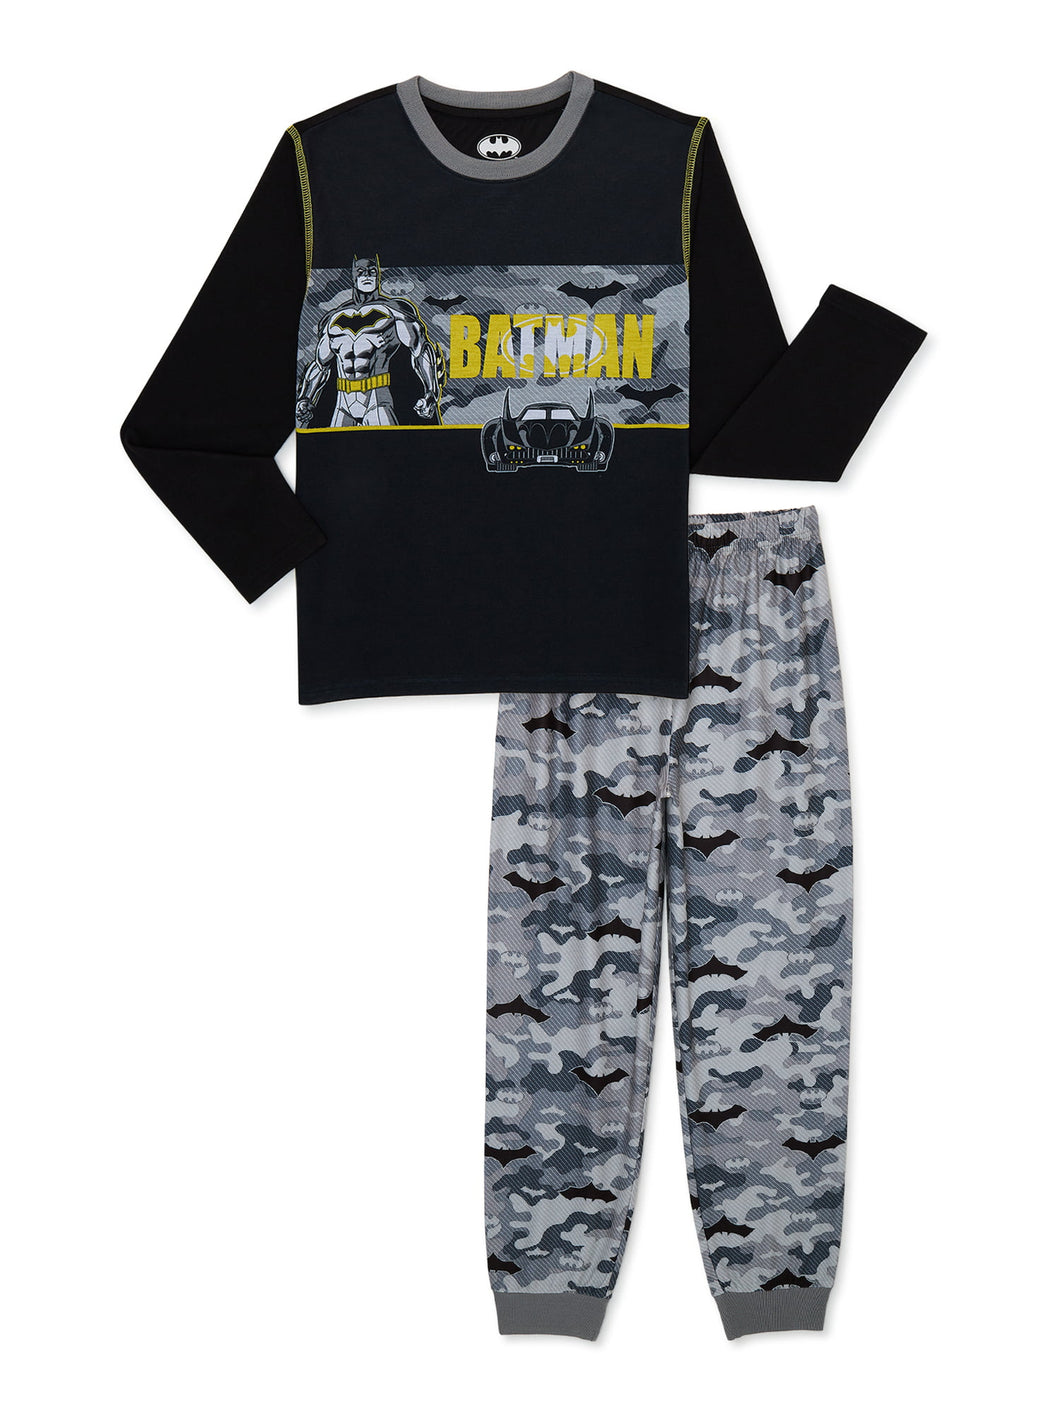 Batman Boys Long Sleeve Pajamas Set, 2-Piece, Size X-Small